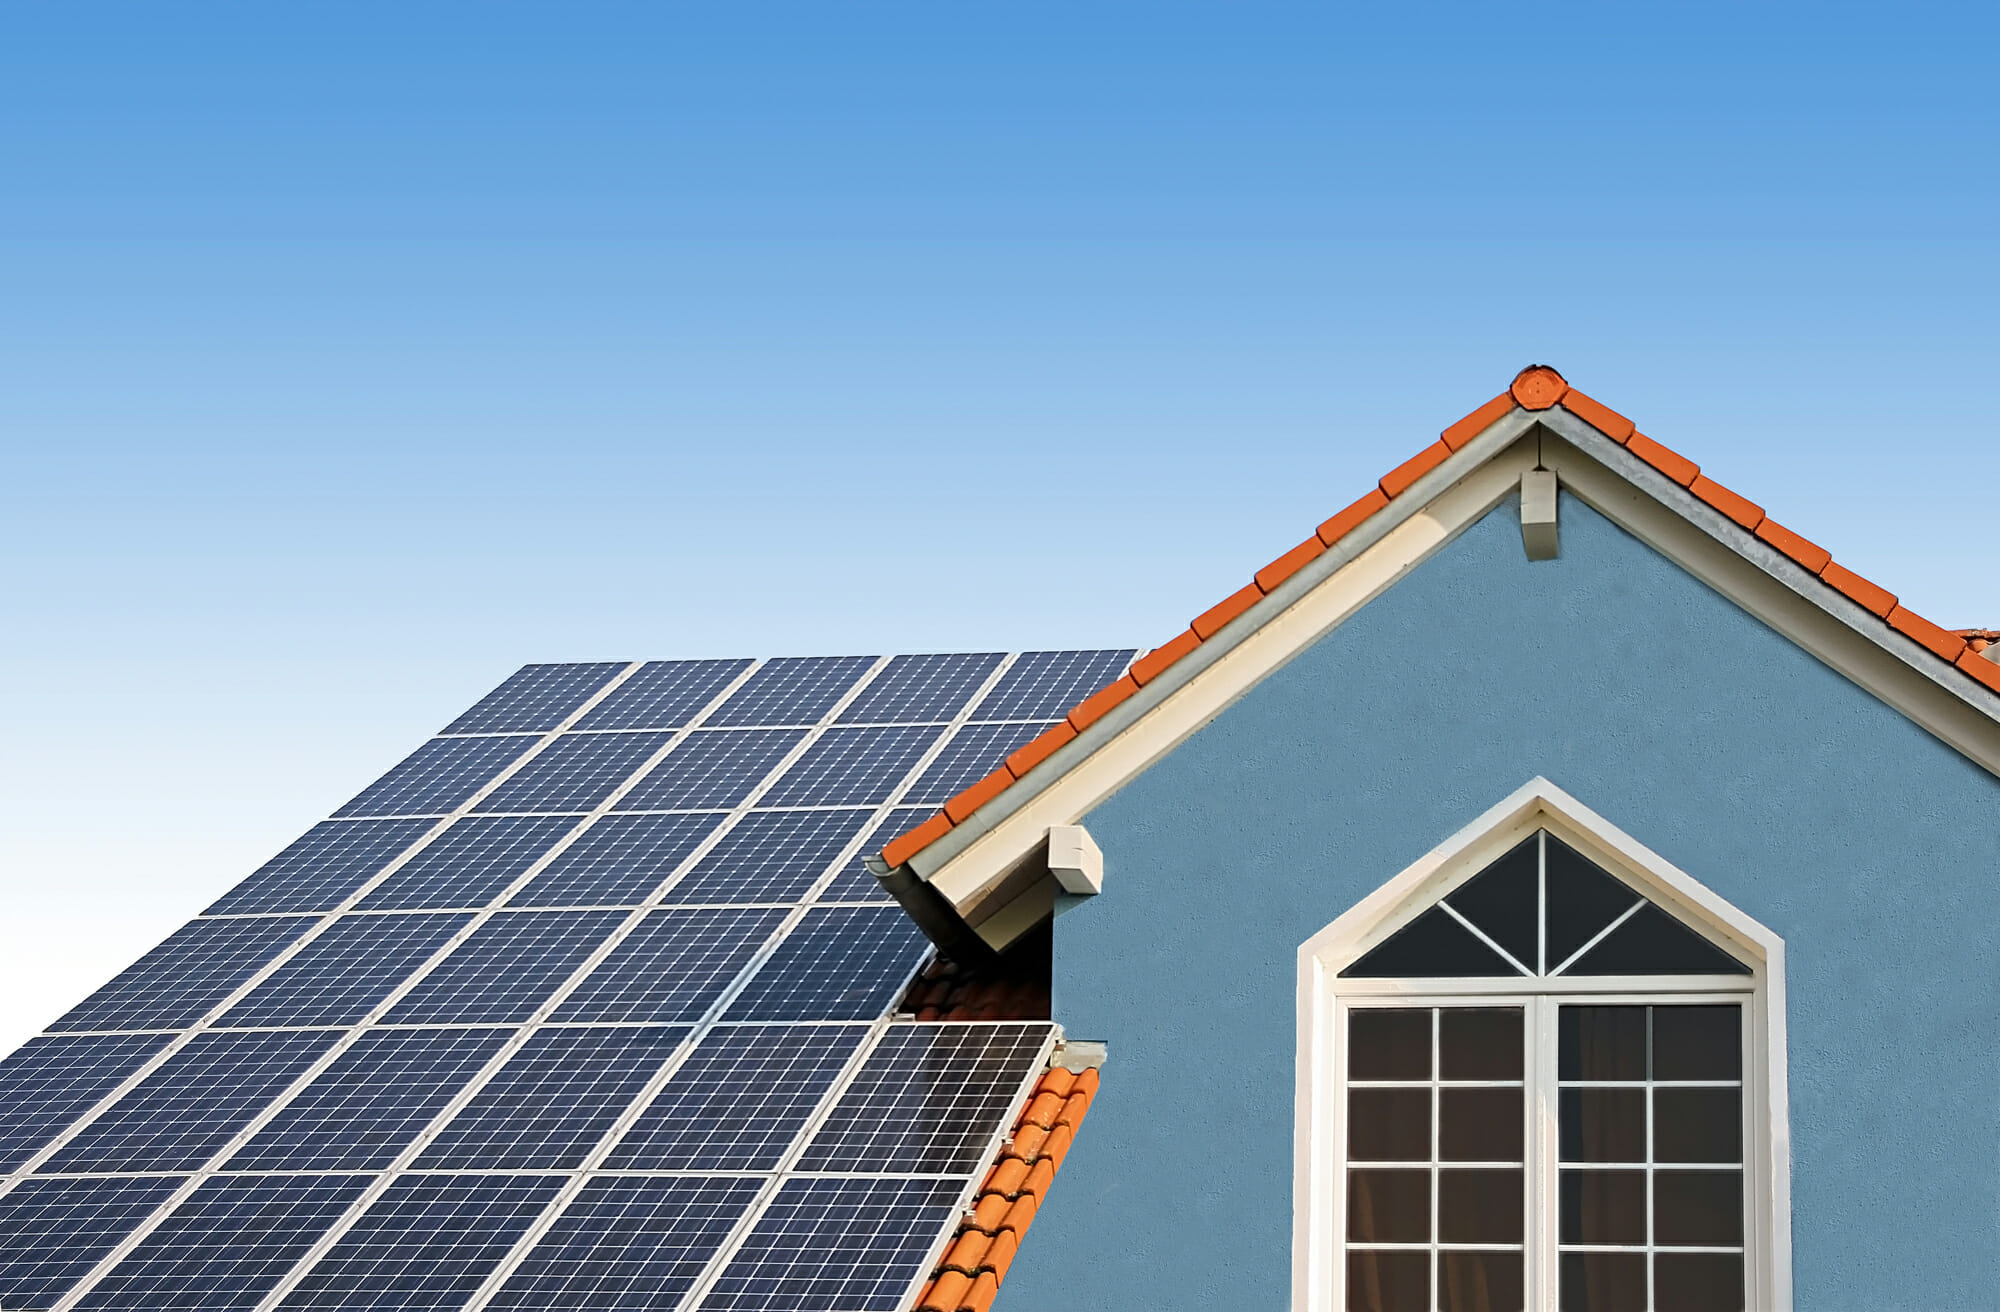 4 Types of Solar Panels - 2020 Solar Installation Options - Modernize